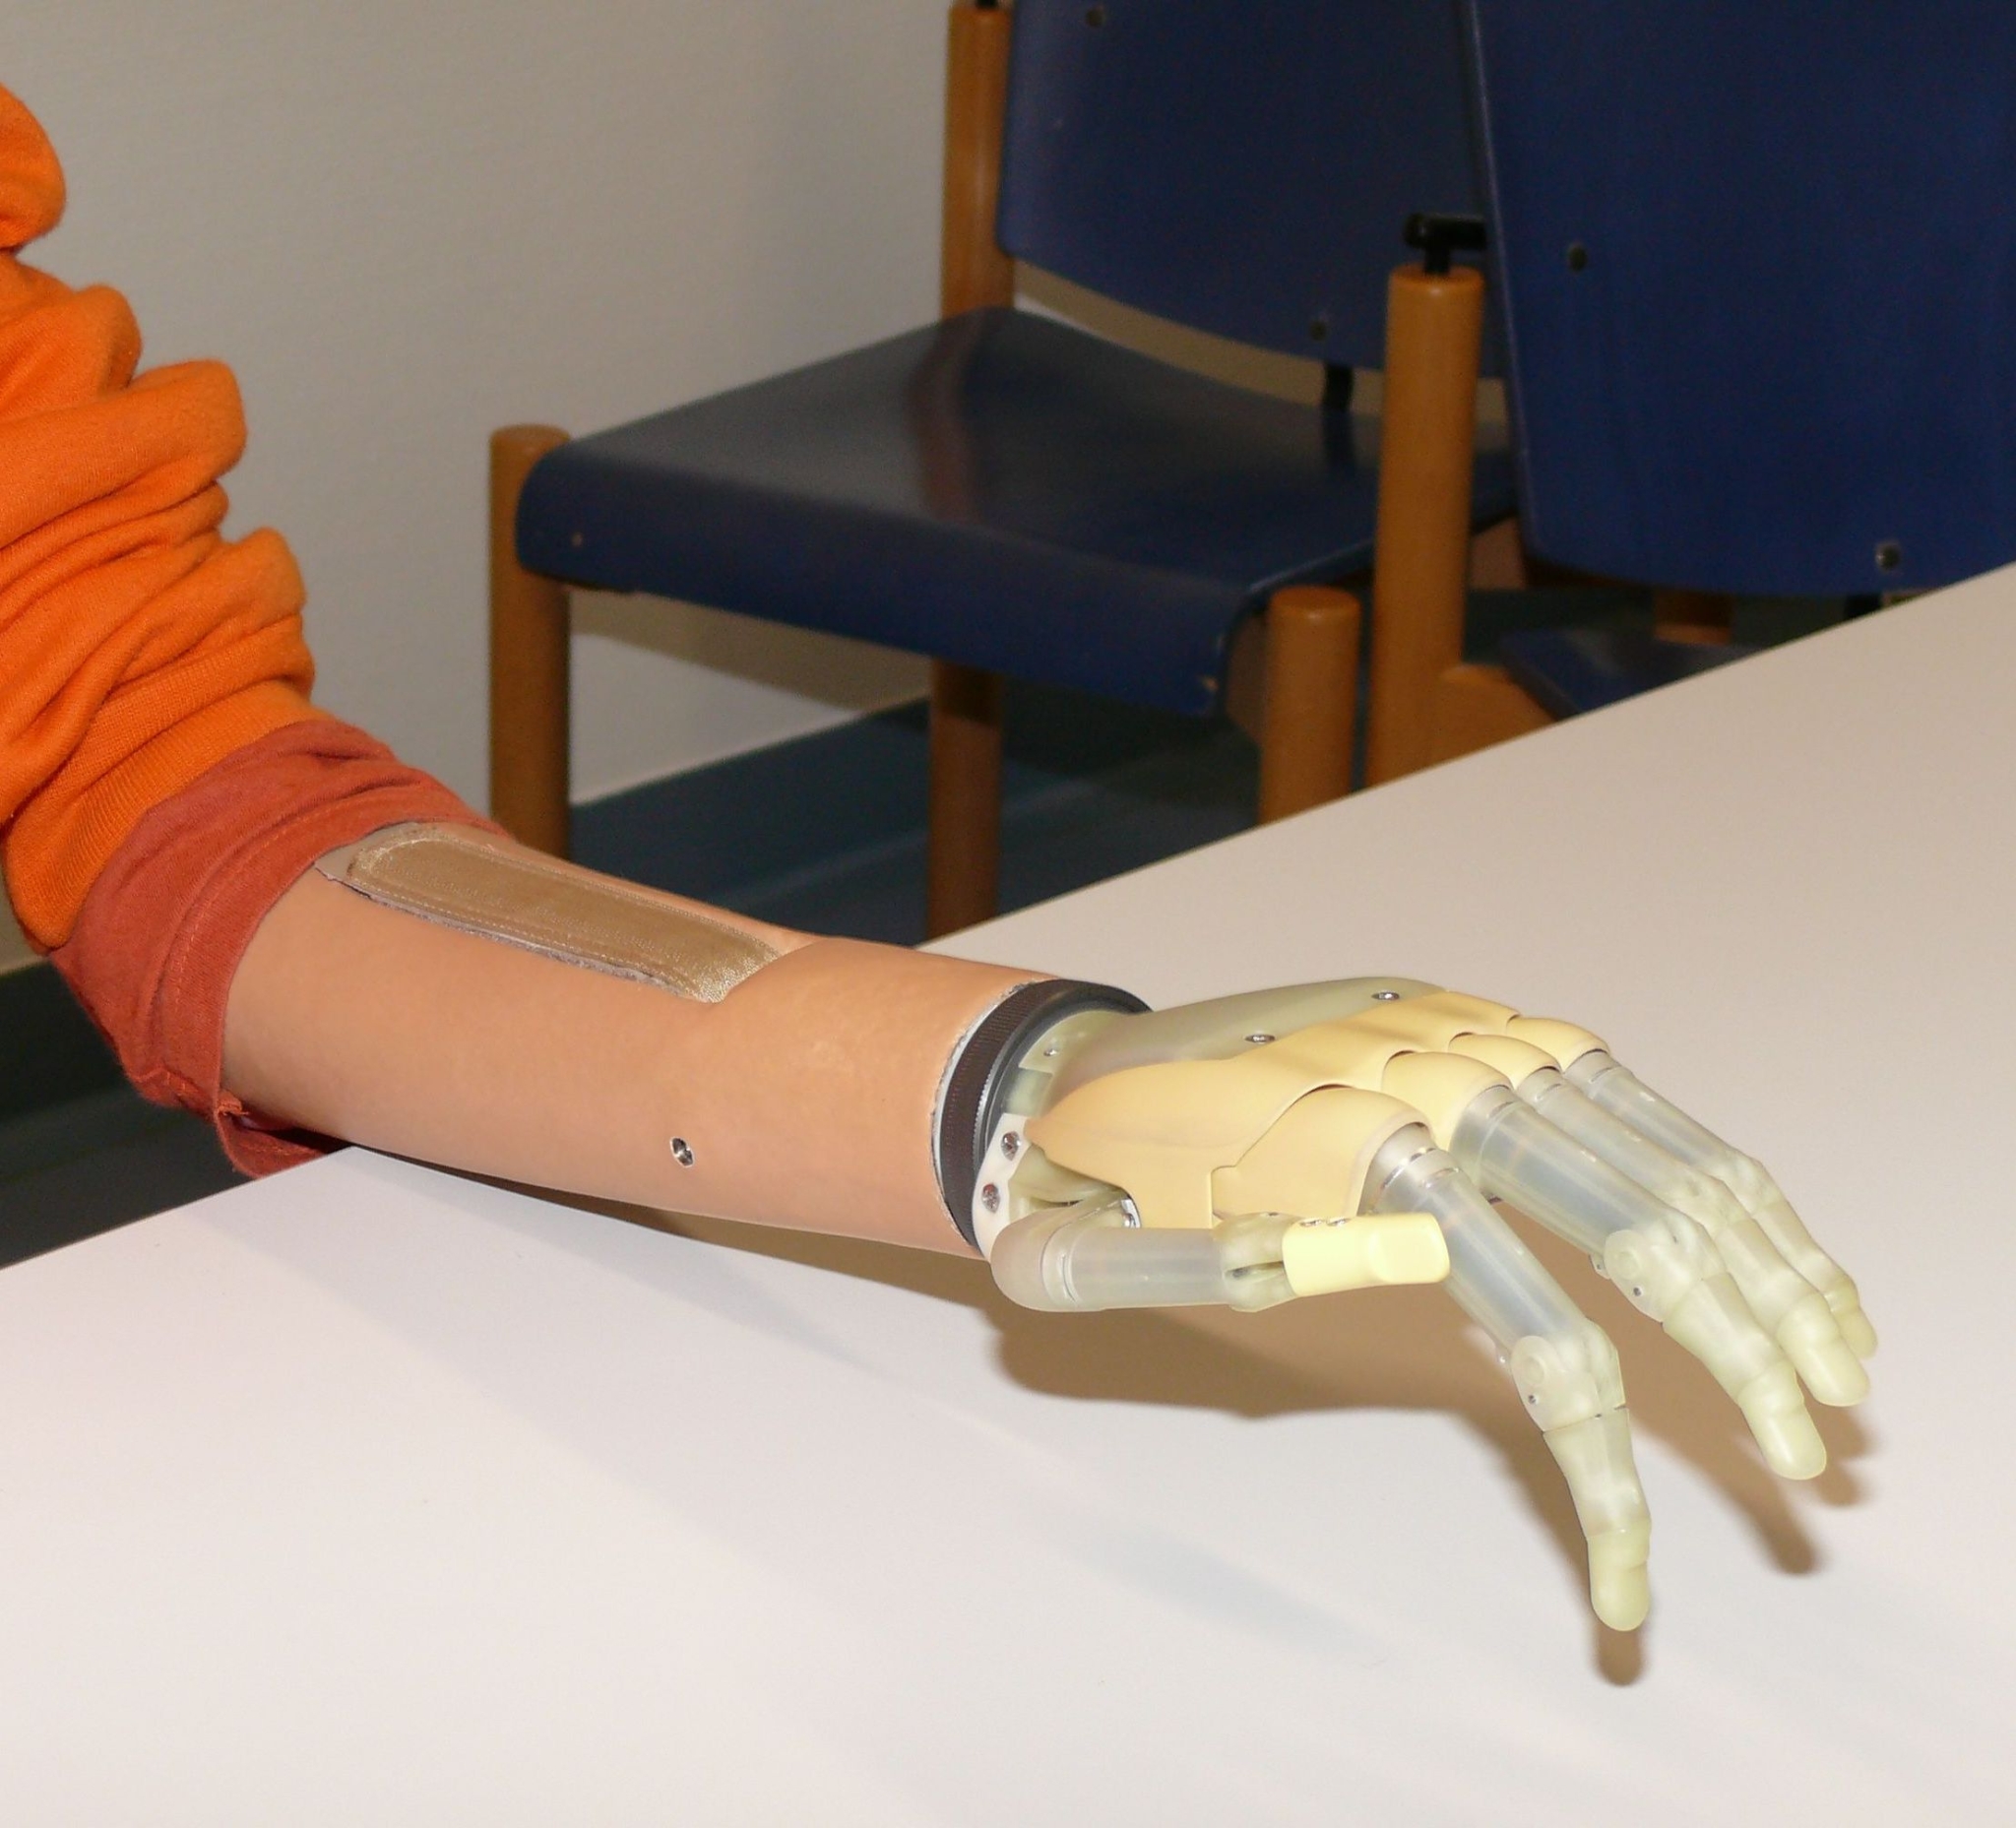 The bionic hand “I-Limb” of the Scottish company “Touch Bionics” (Photo: Hospital of Orthopaedics at Heidelberg University)